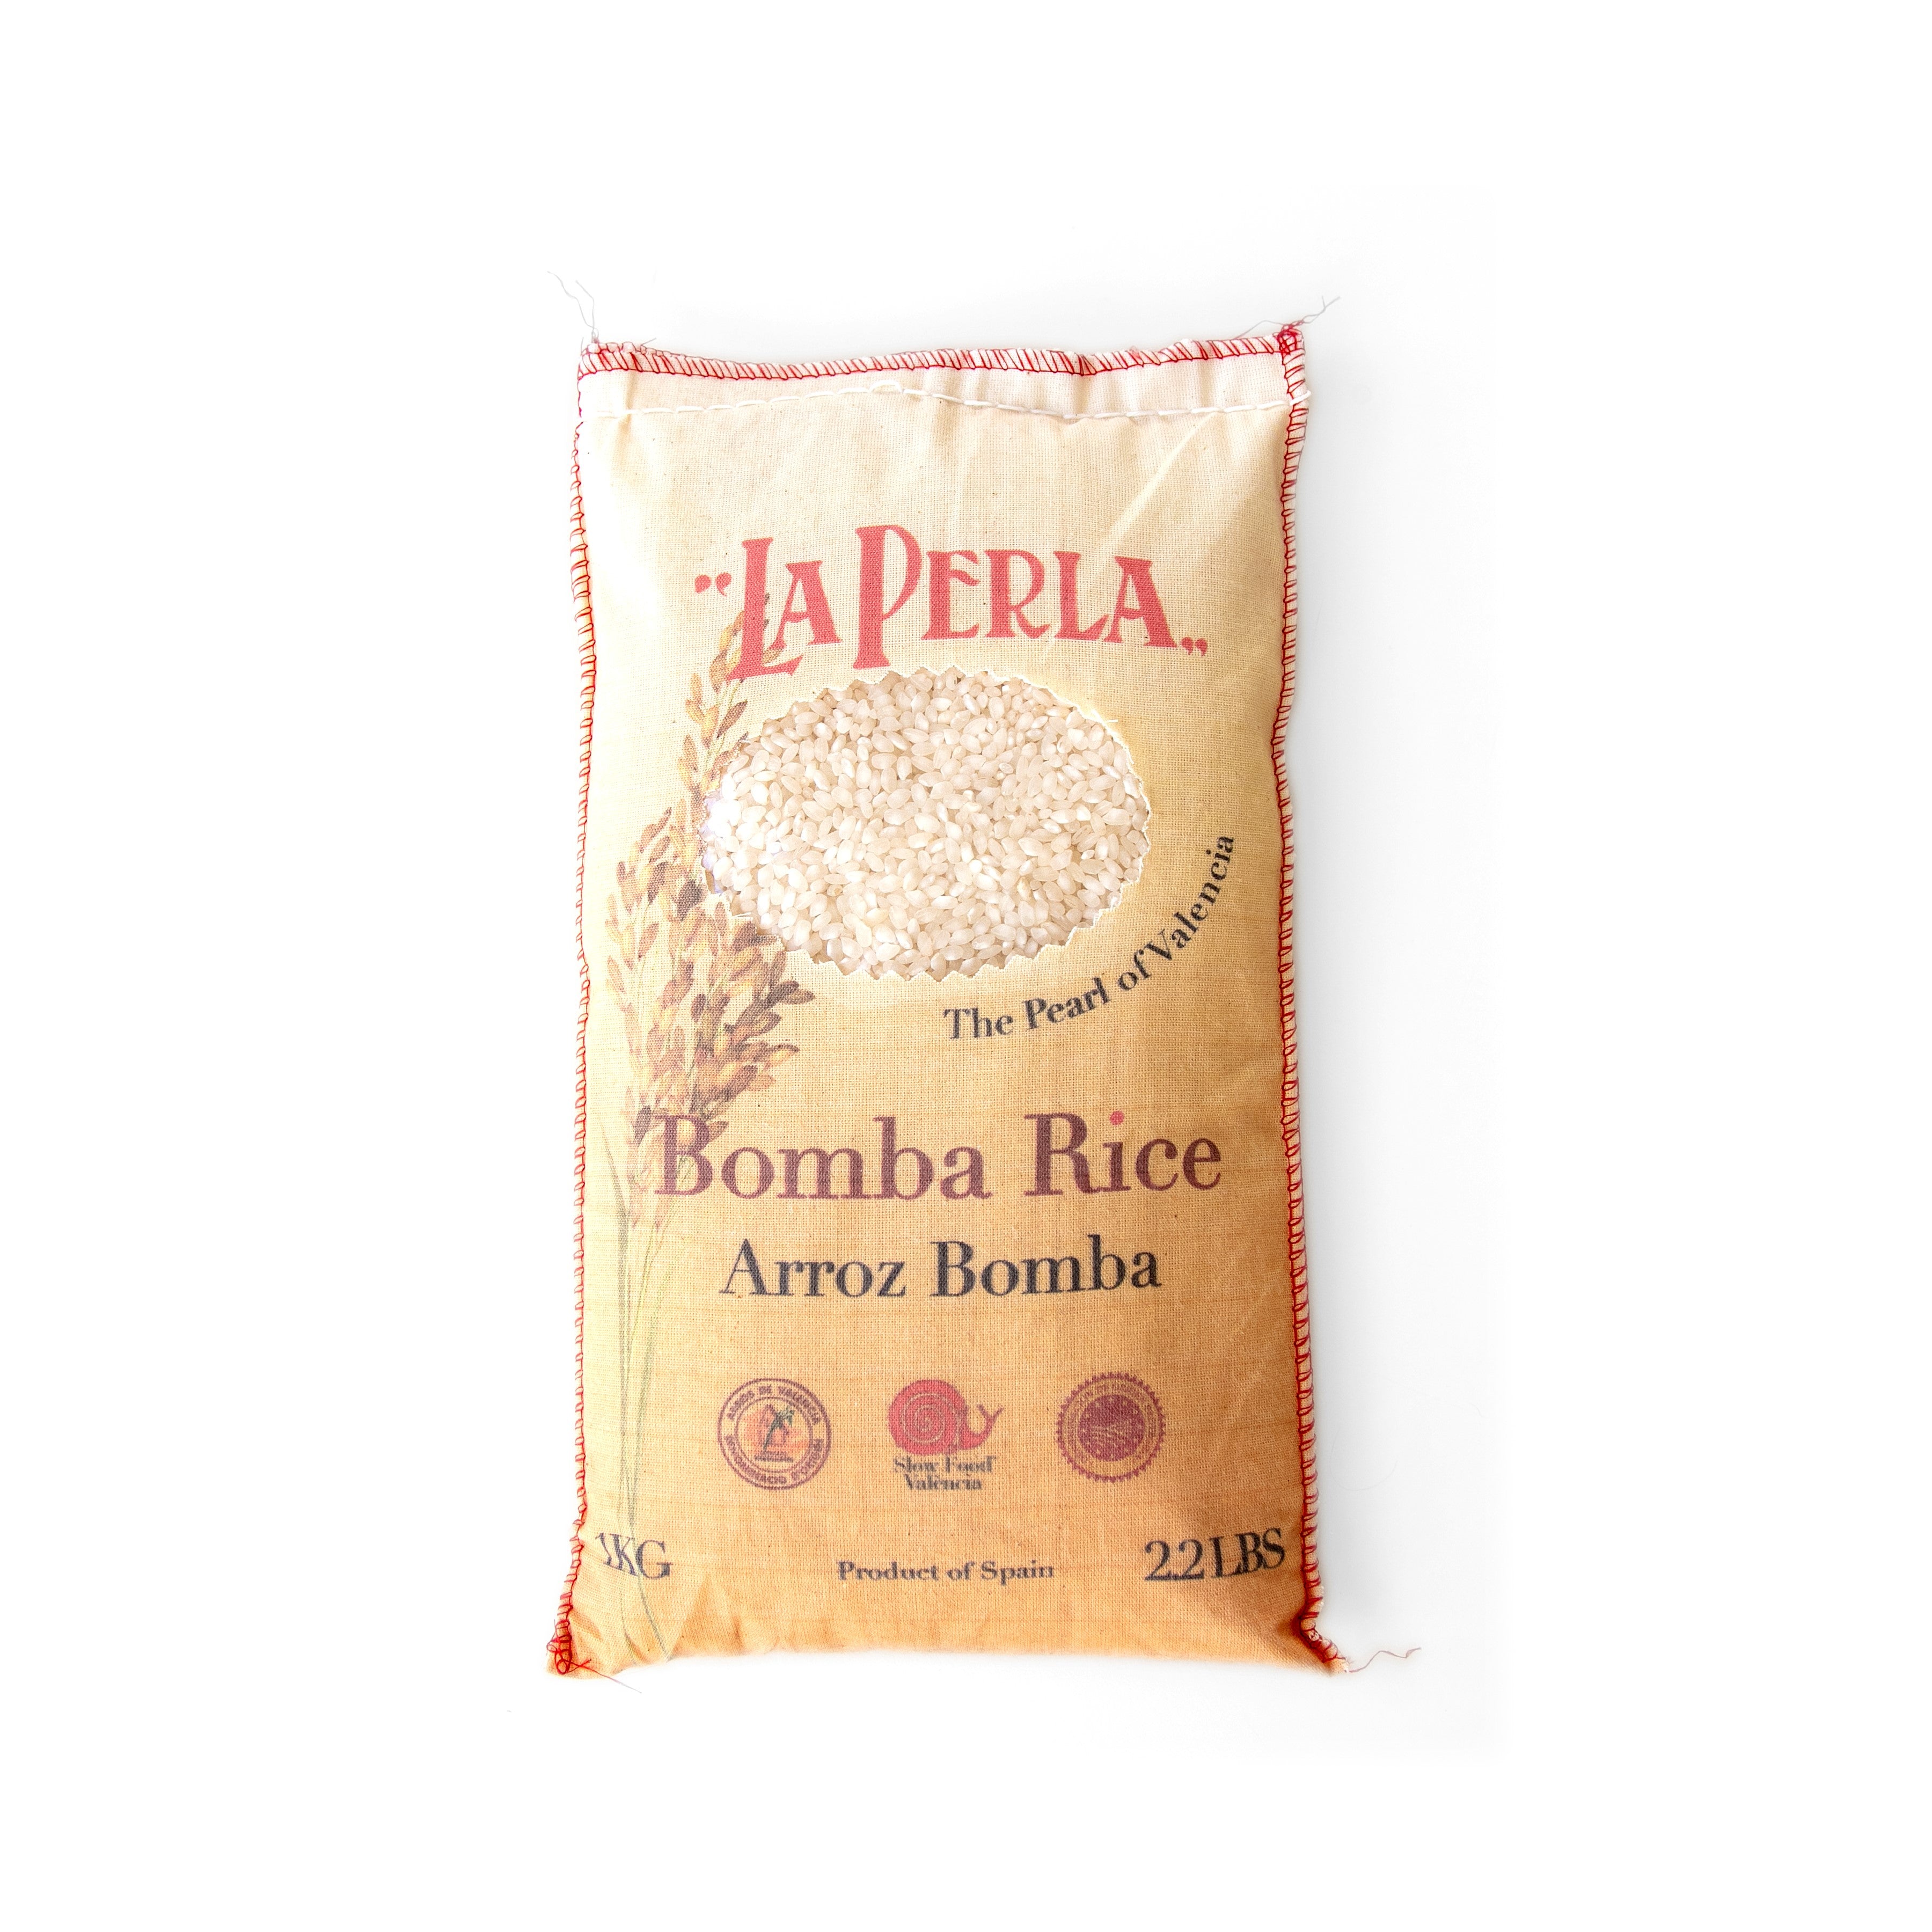 La Perla Bomba Rice Valencia Paella Rice Arroz La Perla Foods